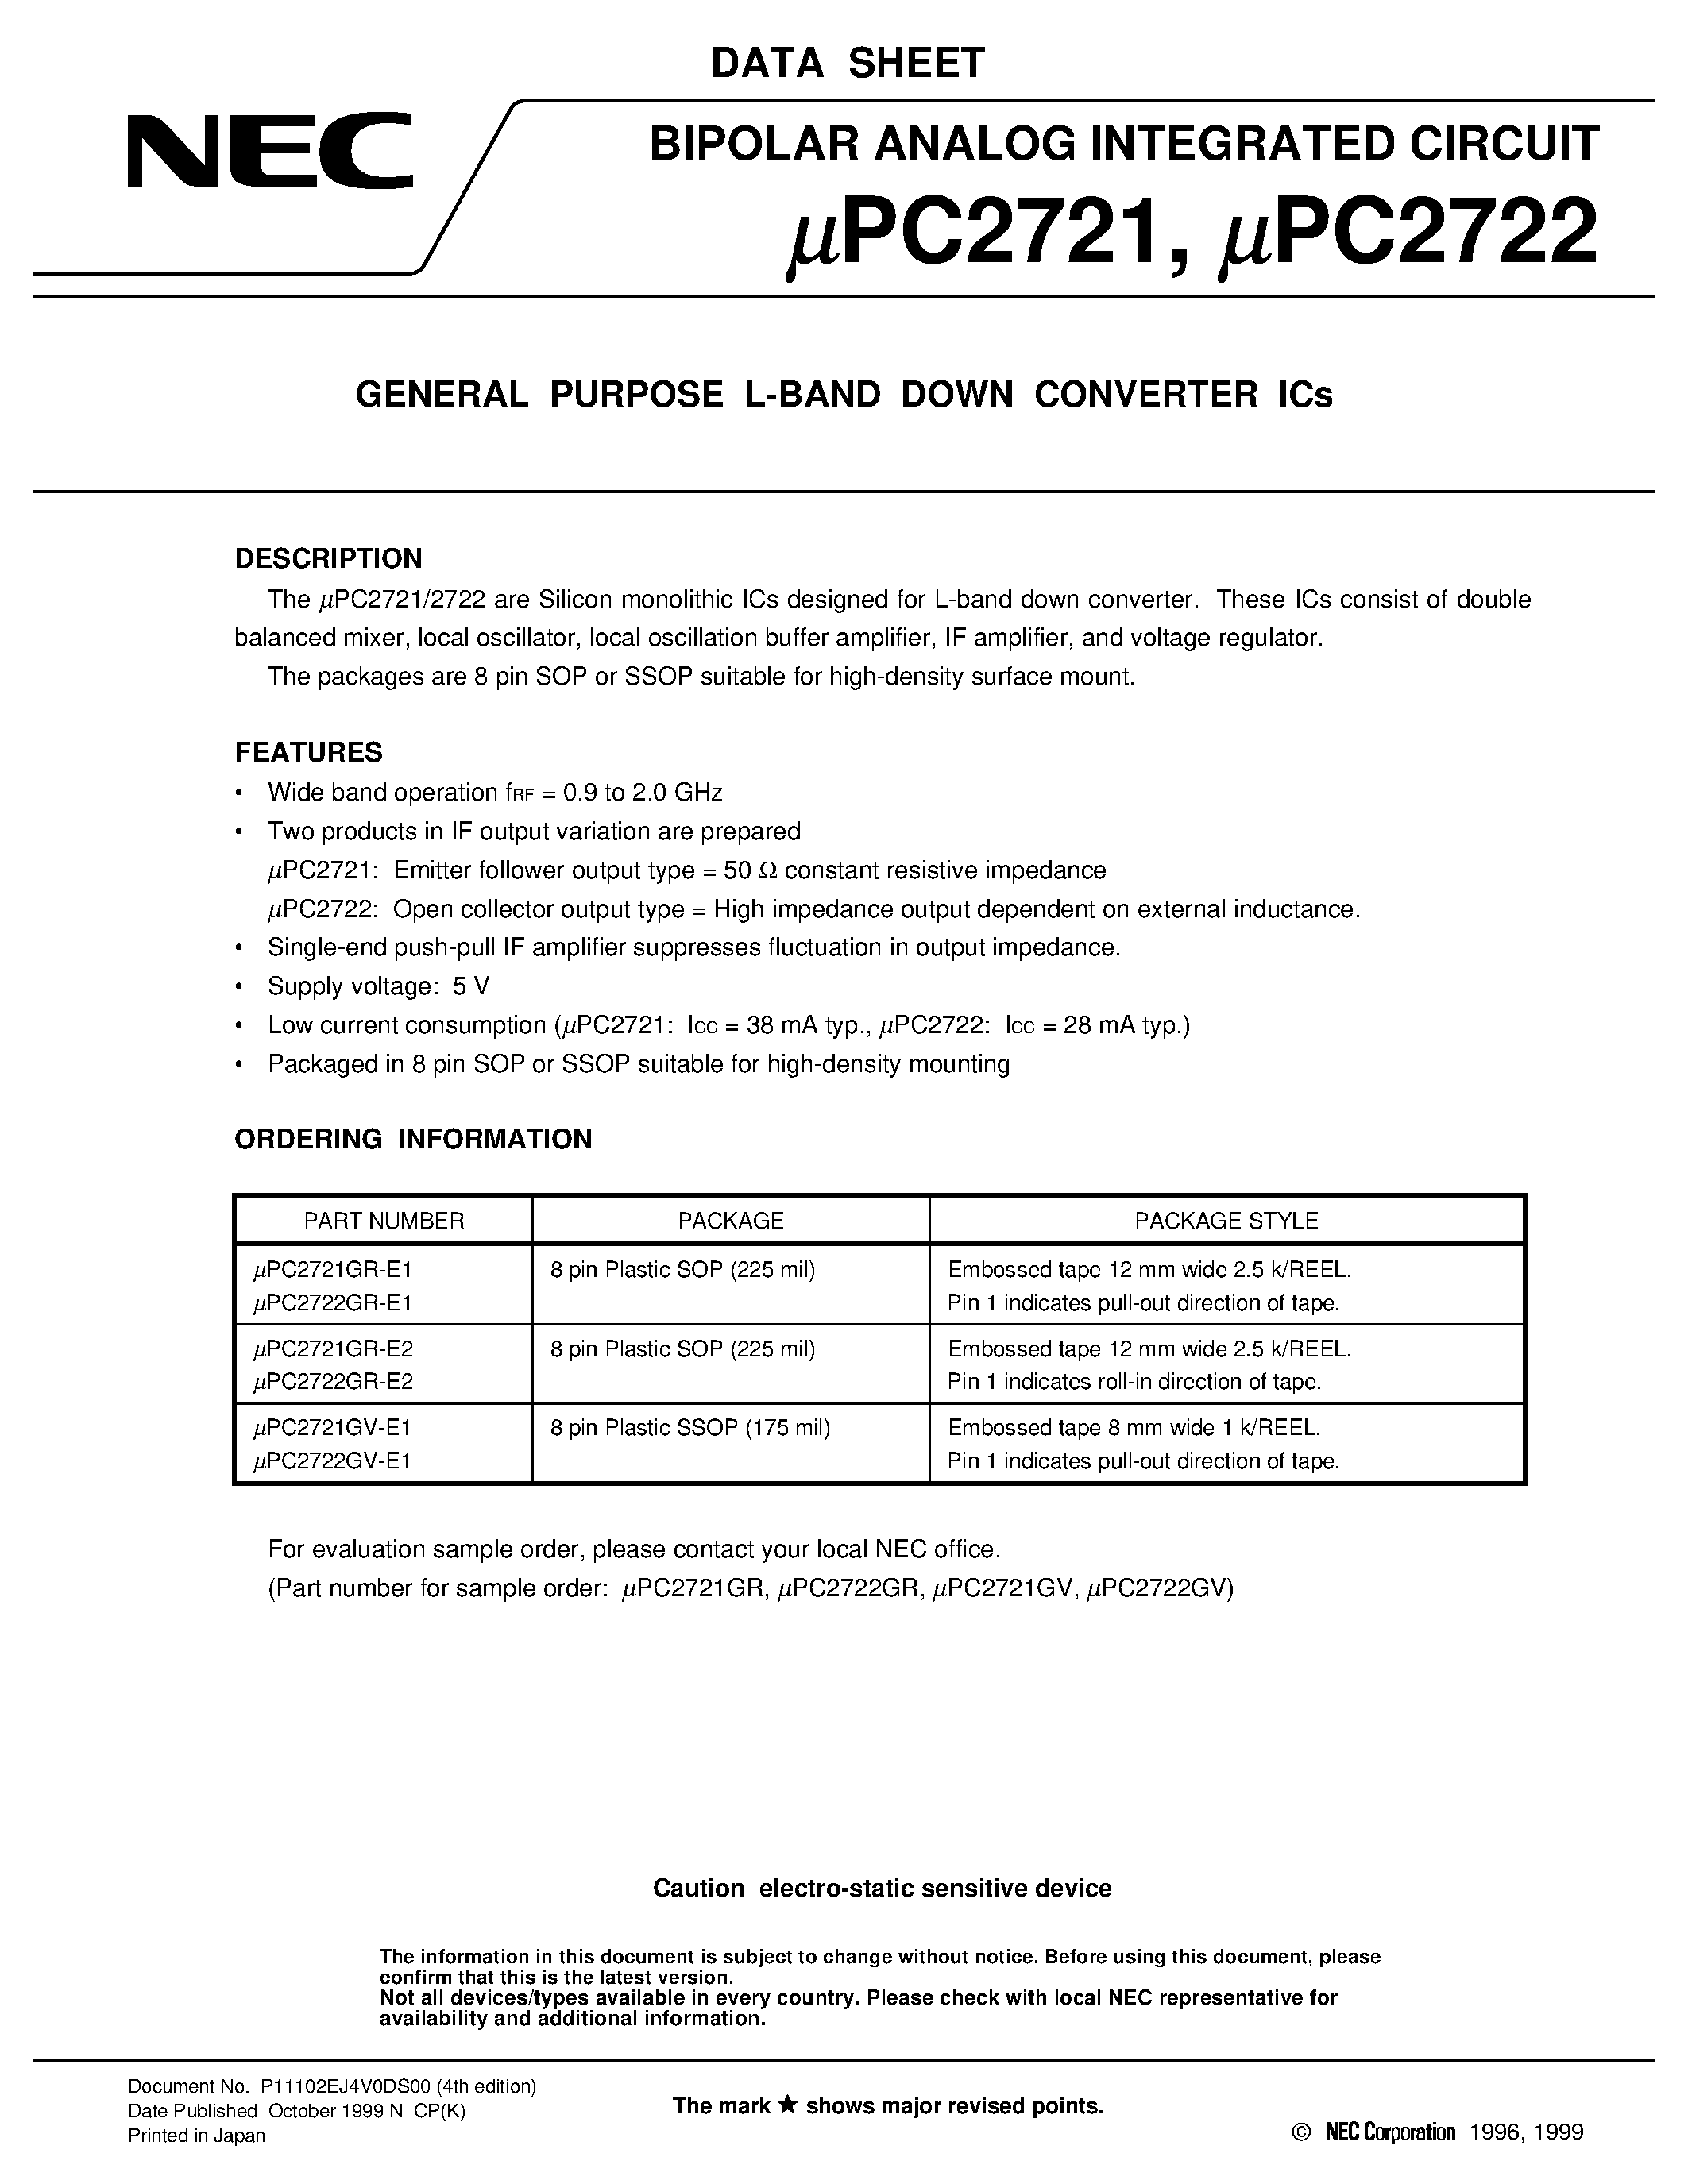 Datasheet UPC2722GV-E1 - GENERAL PURPOSE L-BAND DOWN CONVERTER ICs page 1